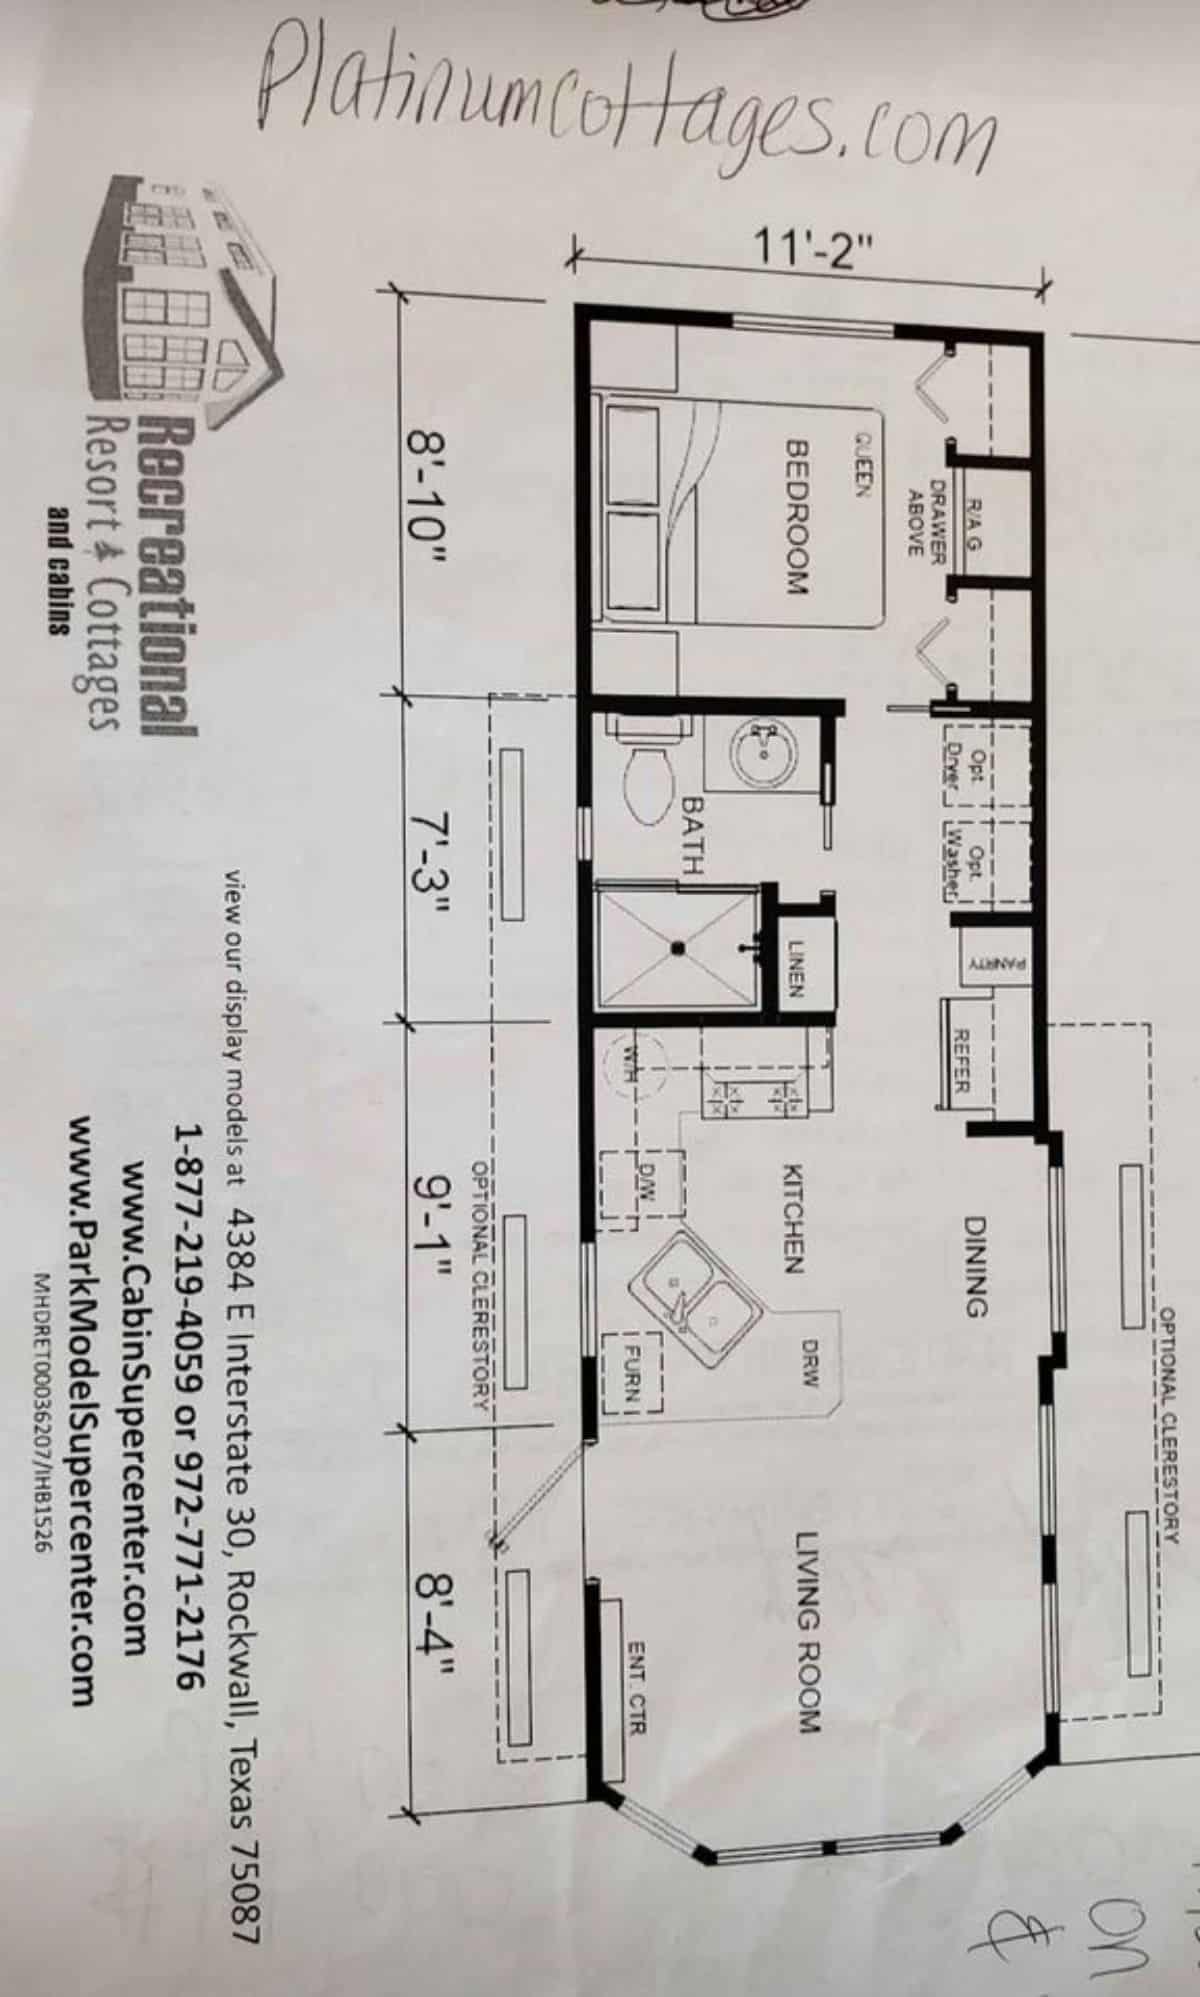 blueprint of spacious 1 bedroom tiny house